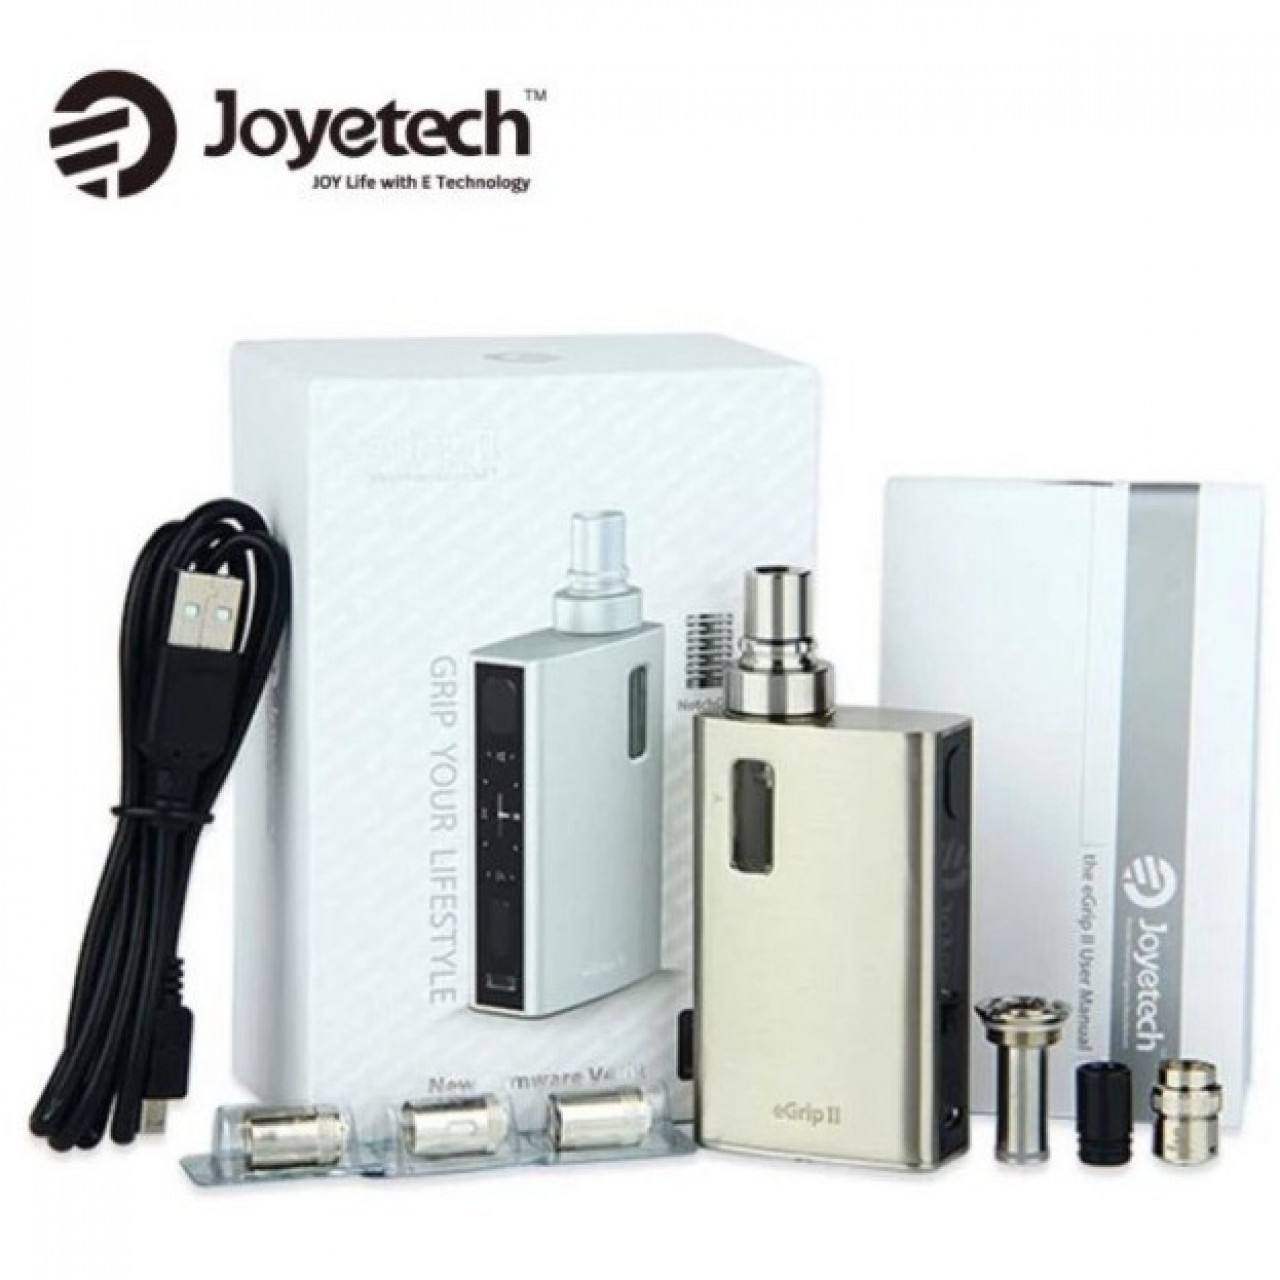 80W Joyetech E-Cigarettes With 2100mAh Battery And 2ml/3.5ml Capacity 2 Kit fit Notch Coil